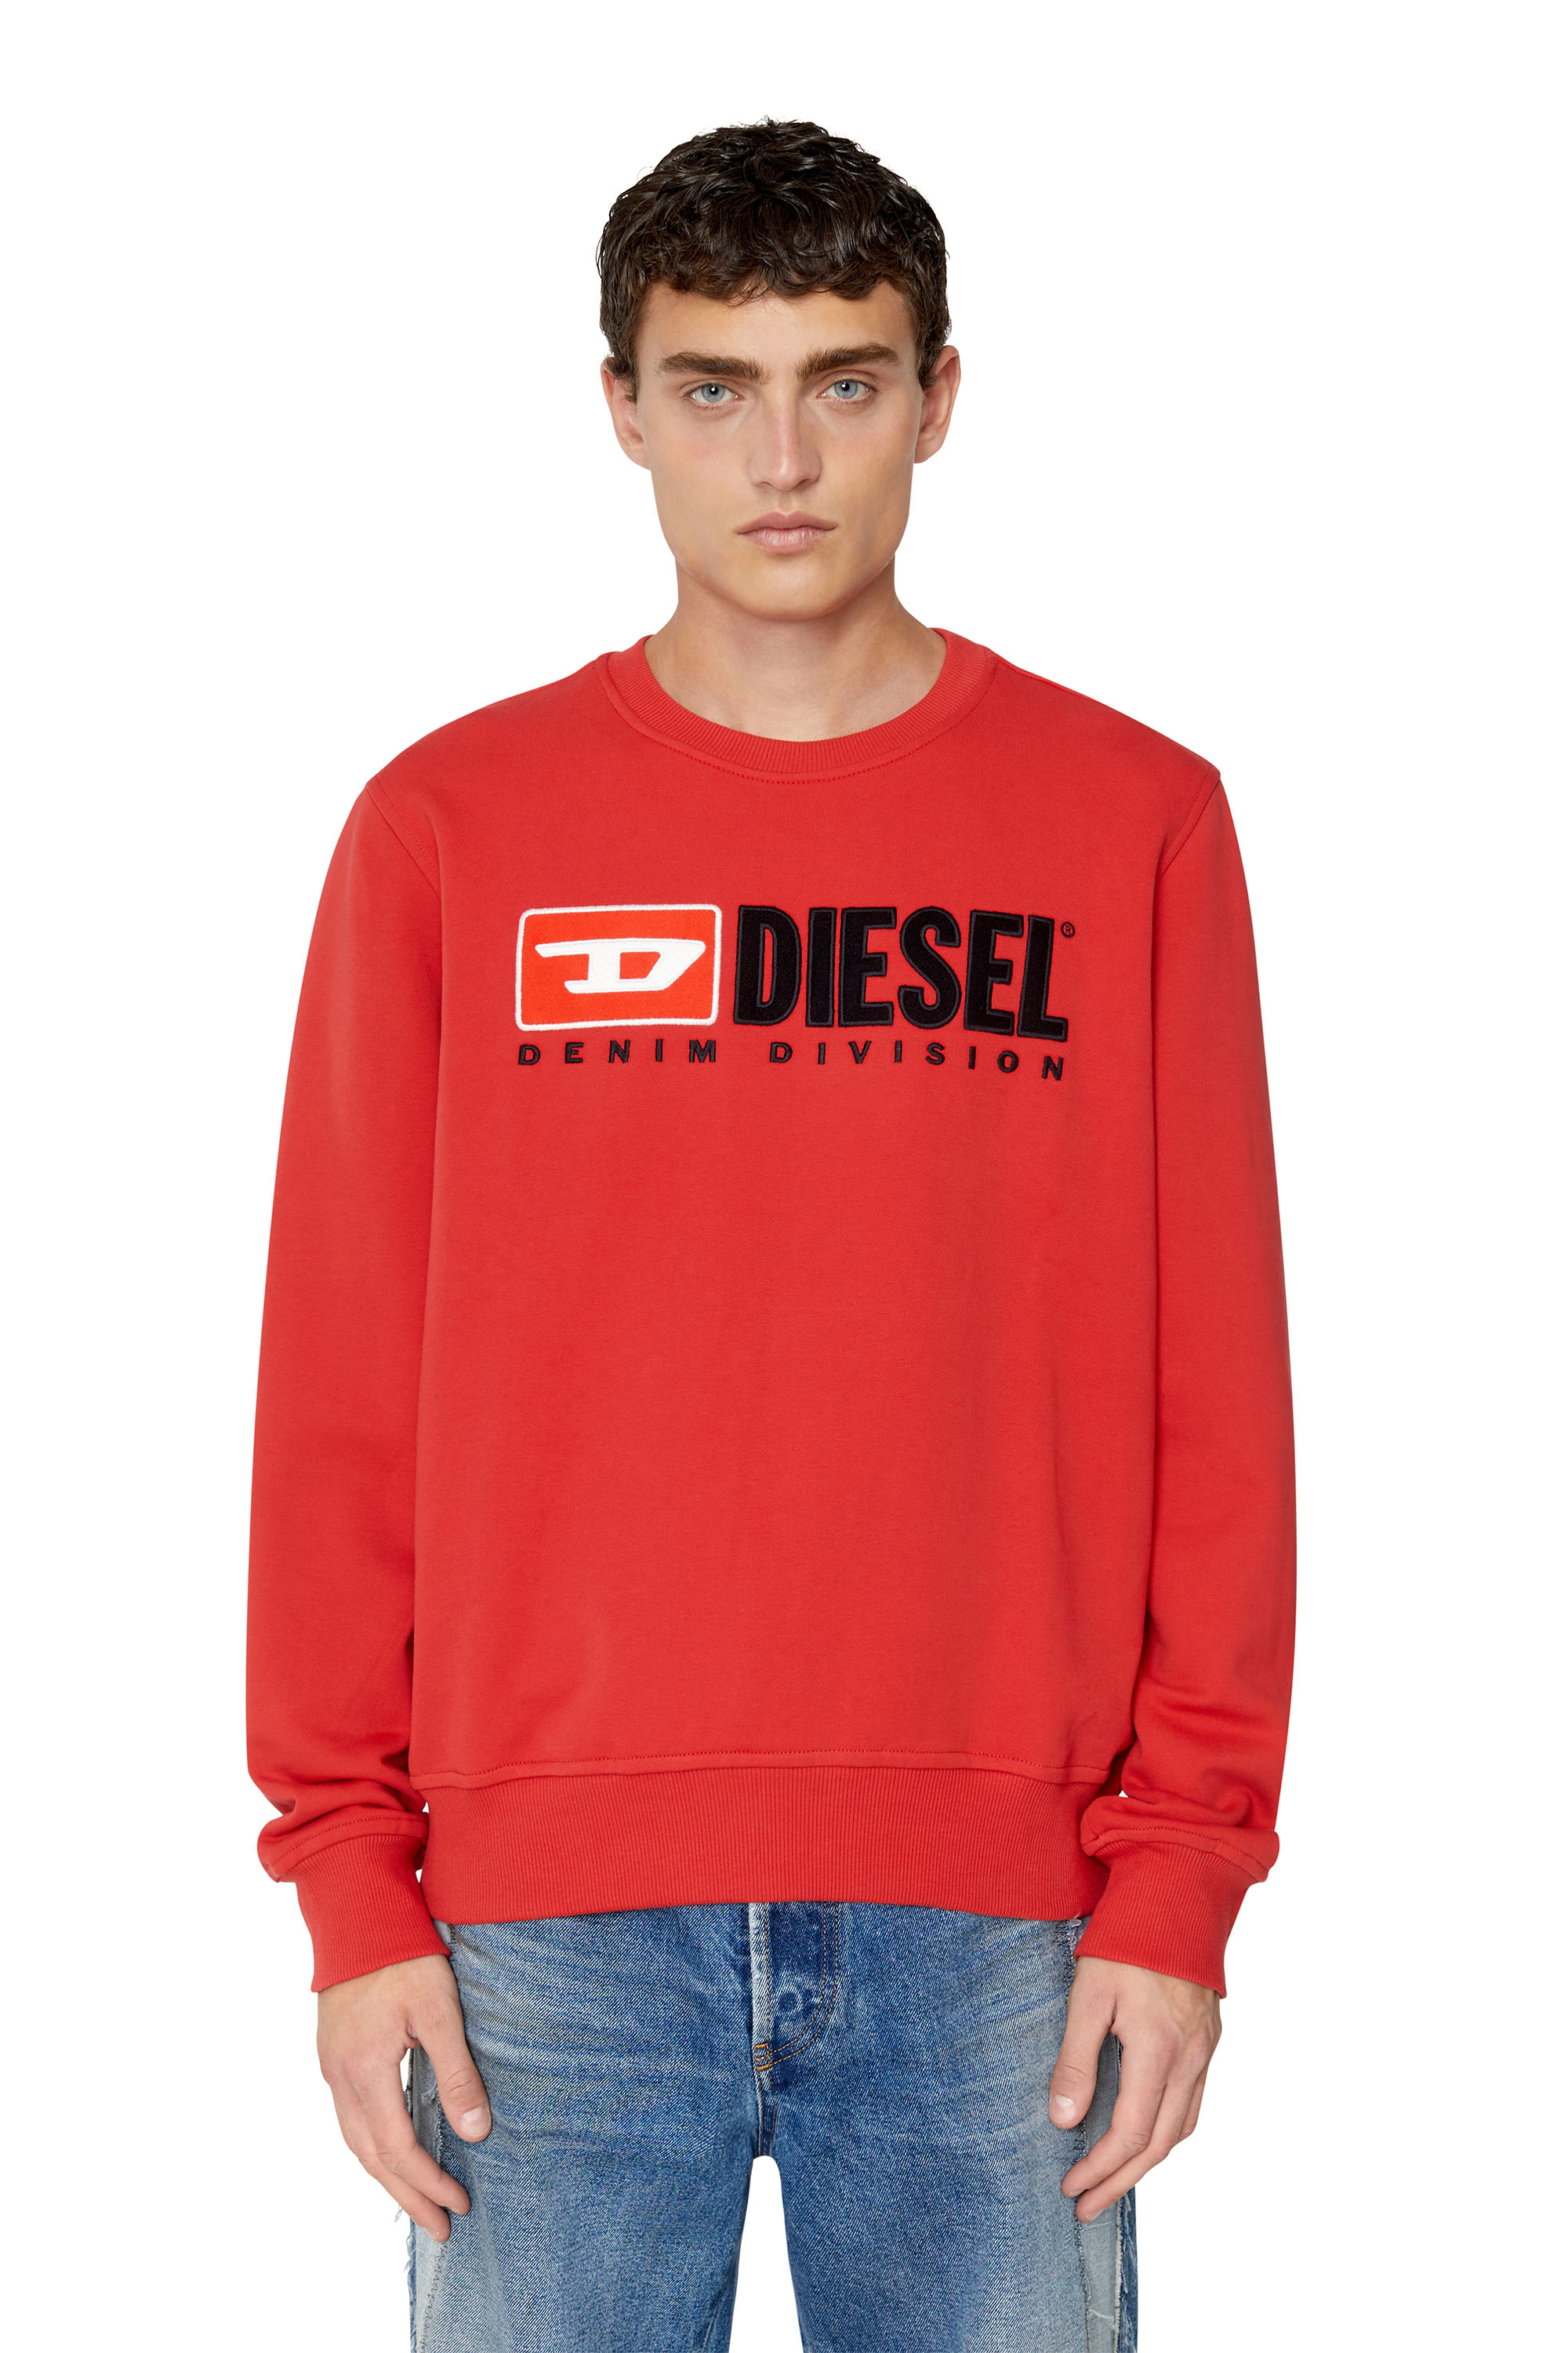 Diesel - S-GINN-DIV, Rosso - Image 1